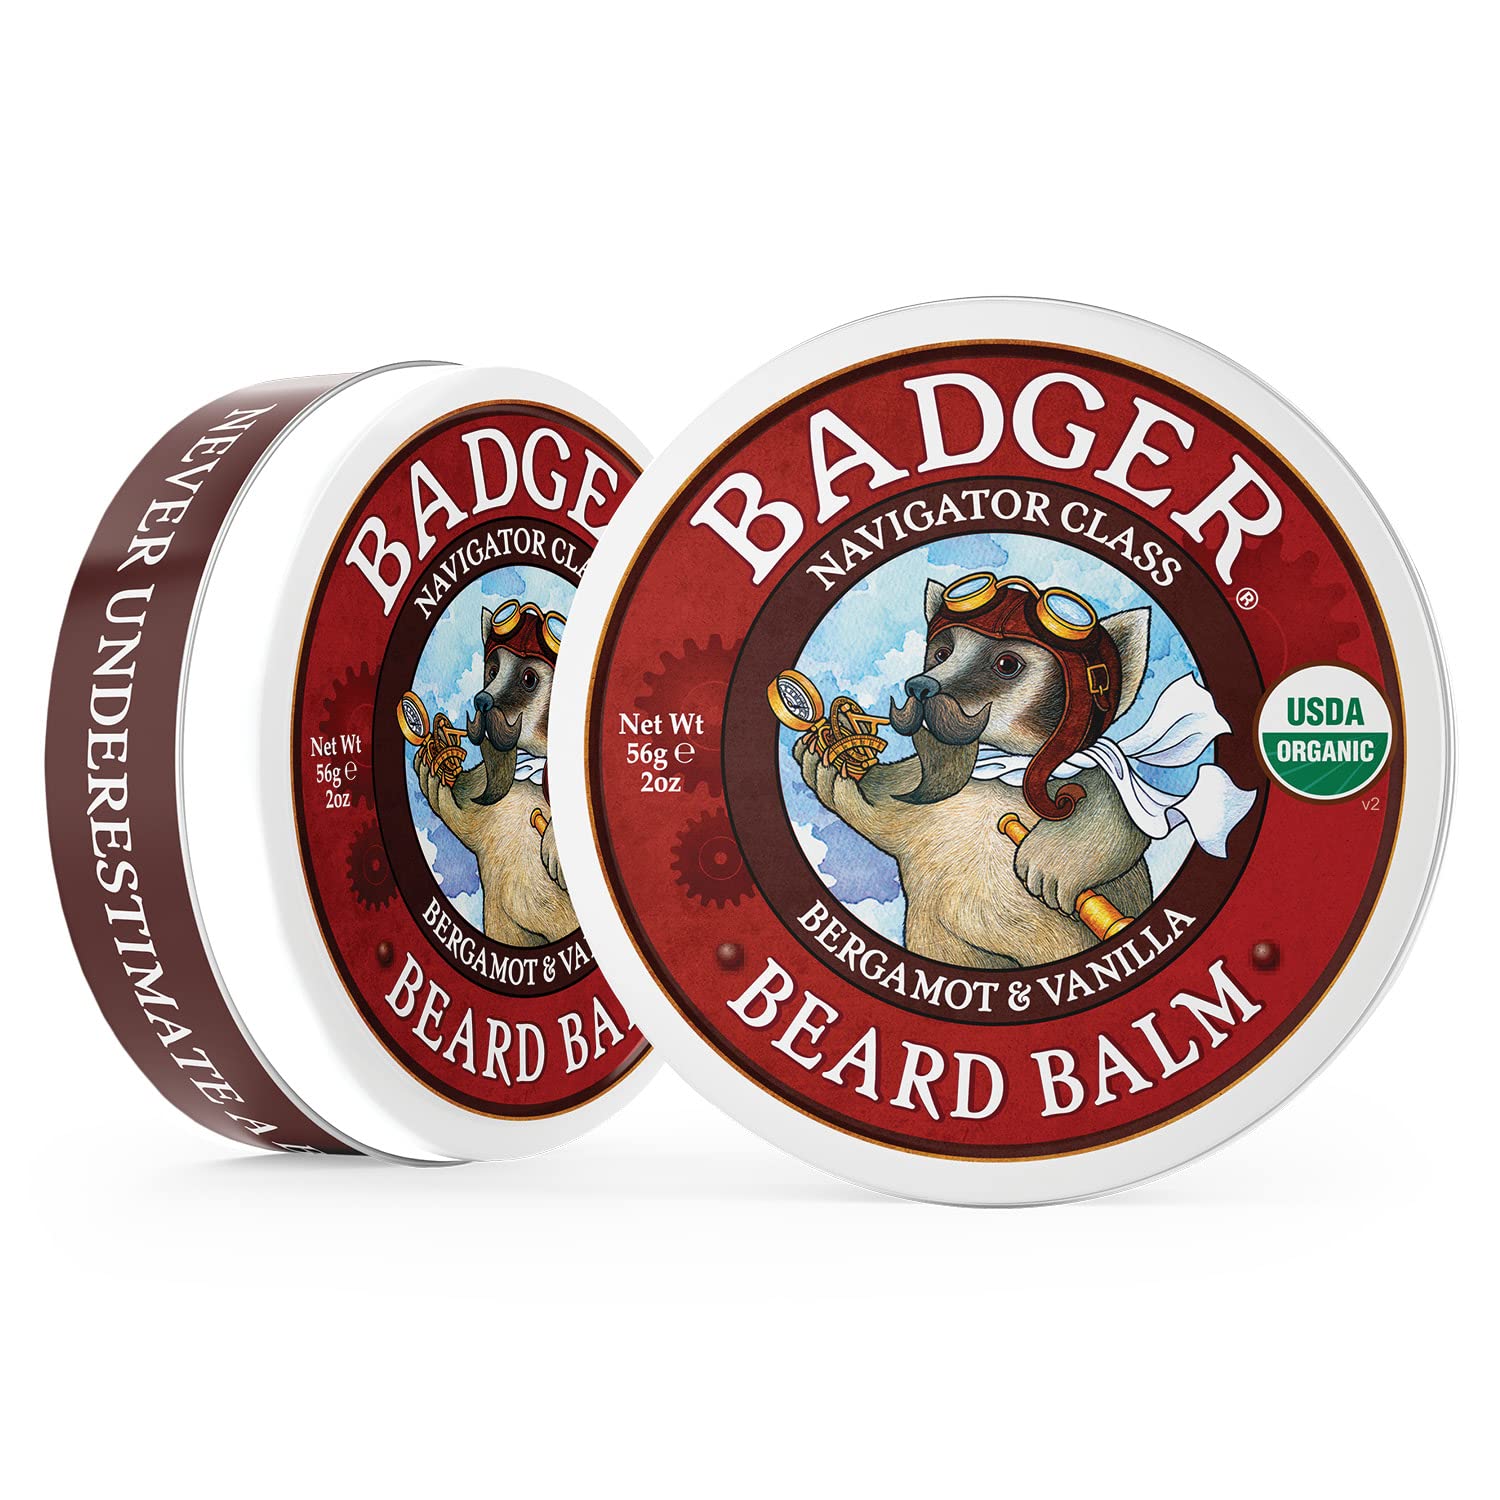 Badger - Beard Balm, Leave-In Beard Conditioner, Organic Beard Balm, Beard Styling Balm, Non-Greasy Beard Moisturizer, Facial Hair Balm, Beard Treatment, Mustache Balm, 2 oz